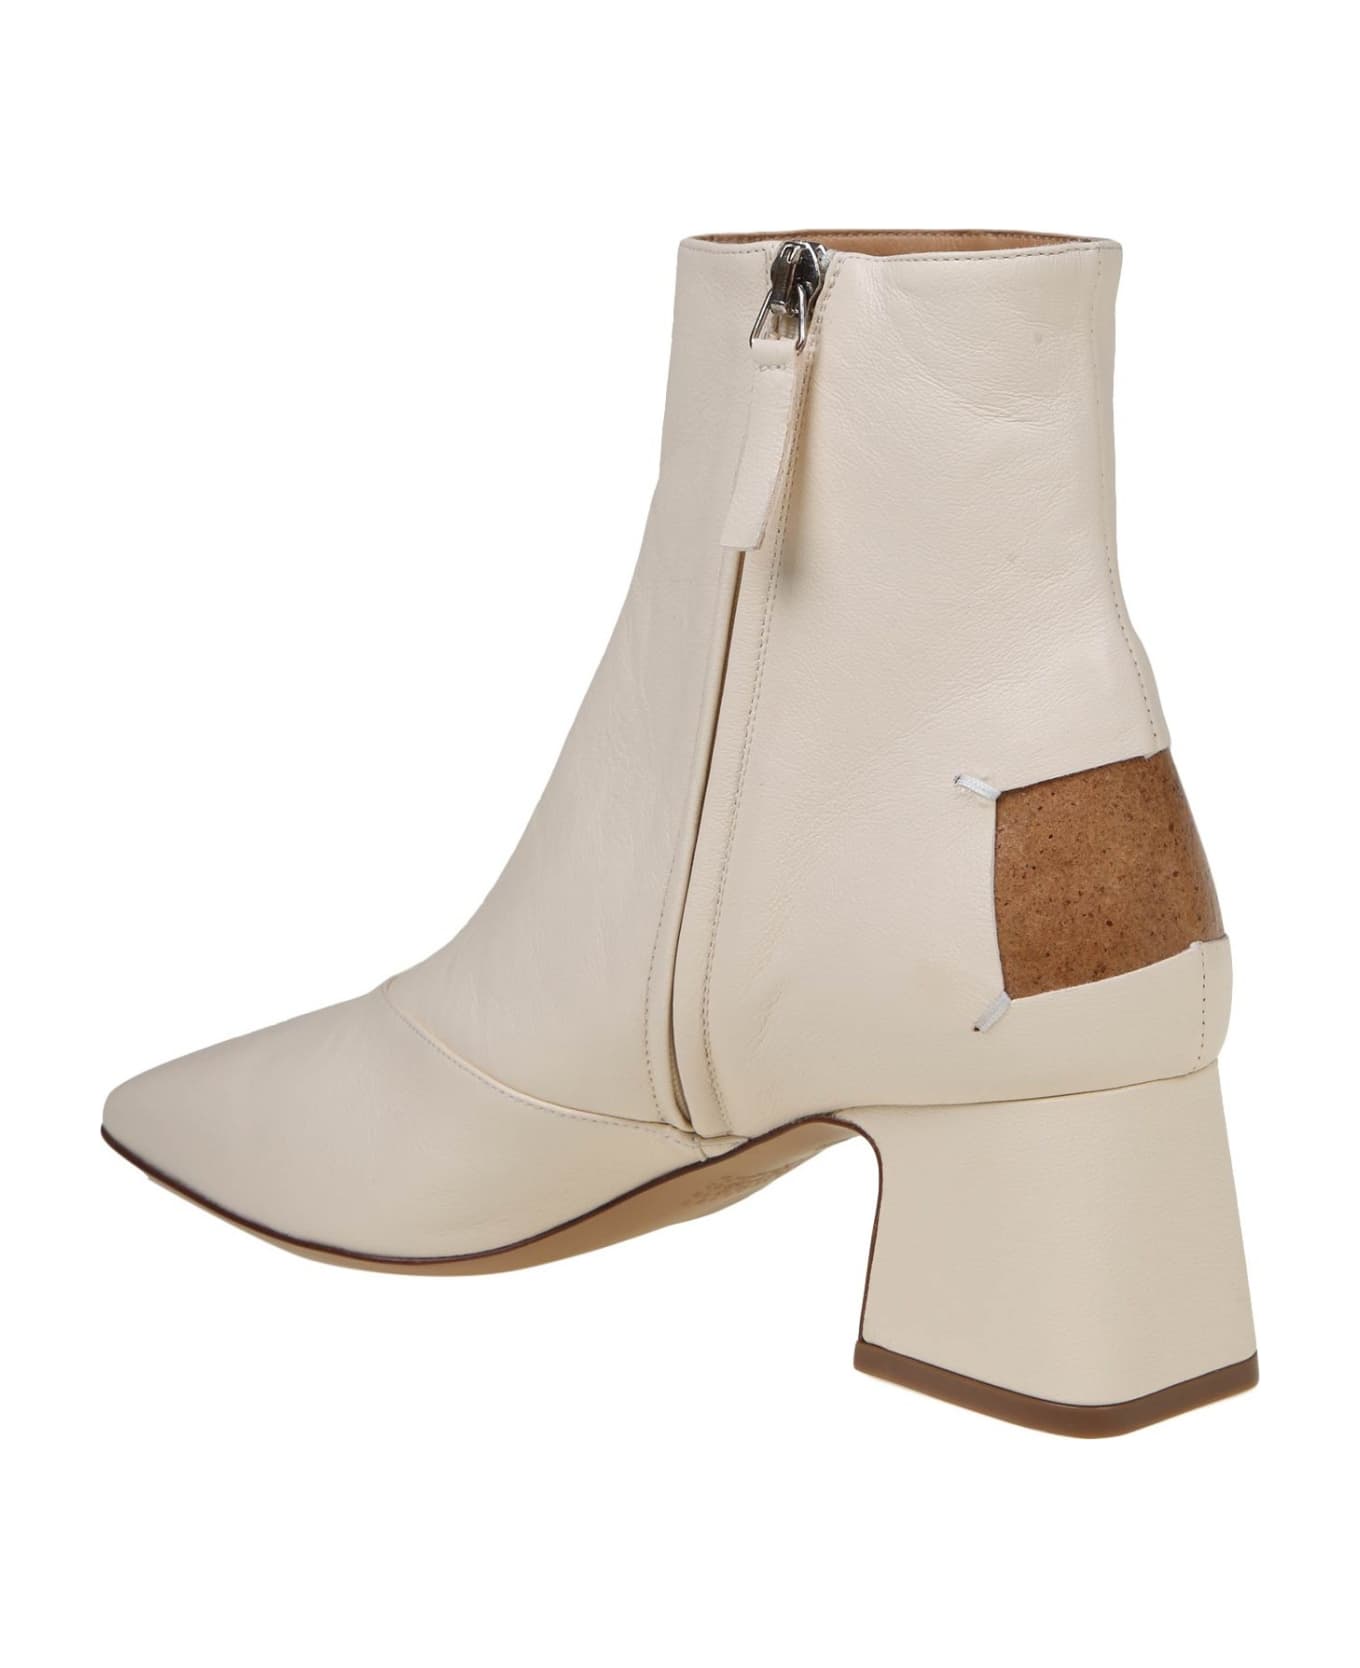 Maison Margiela Side Zip Block Heel Ankle Boots - Cream